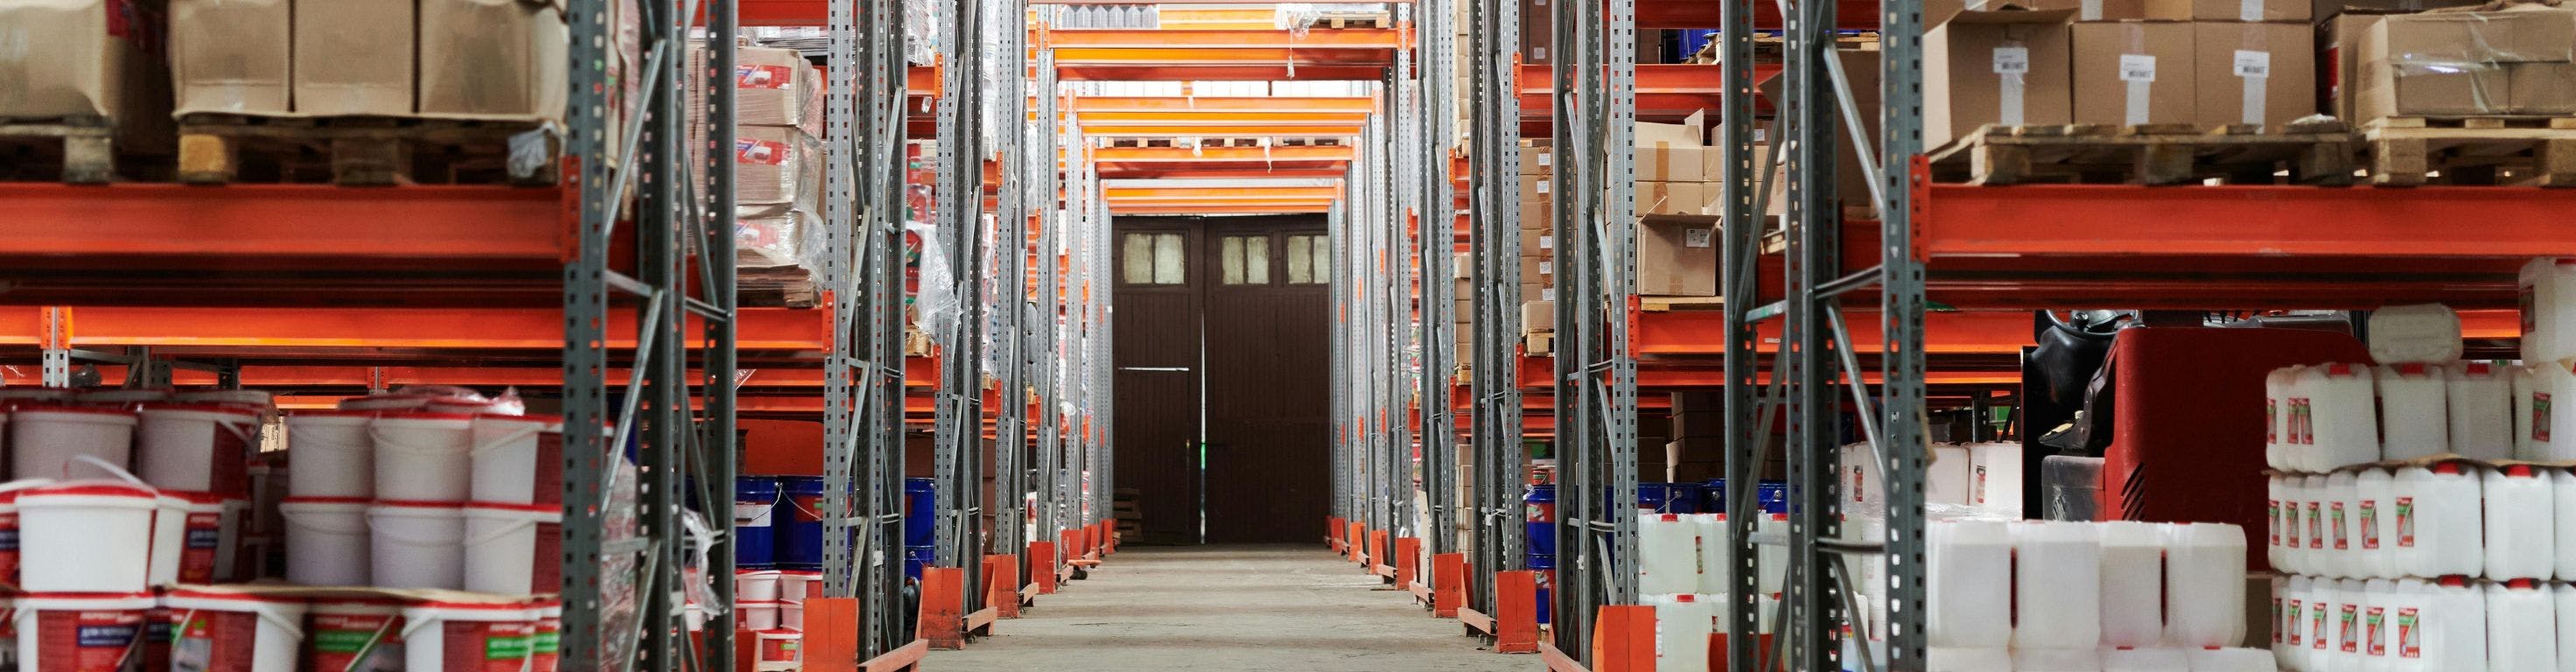 Orange warehouse with well-organized shelves